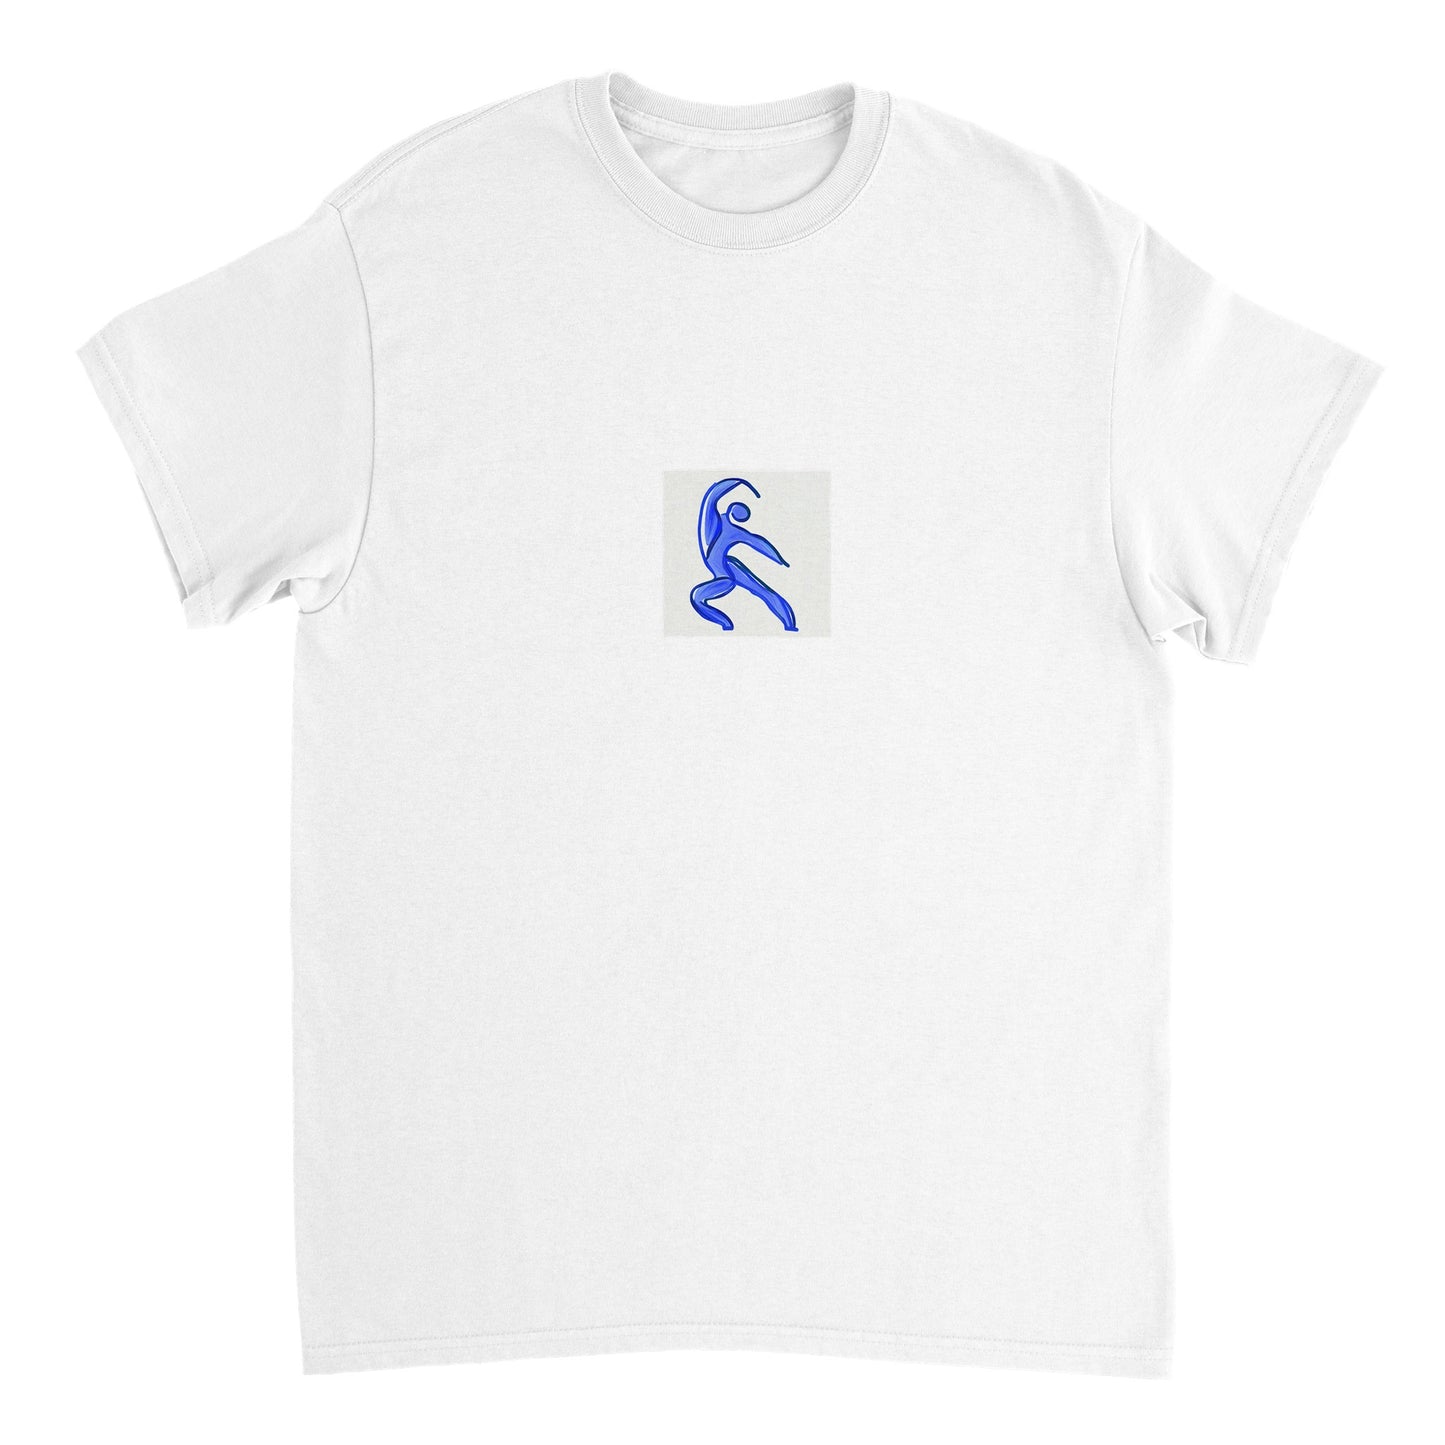 caeruleus saltator / SS23 / T-shirt / white